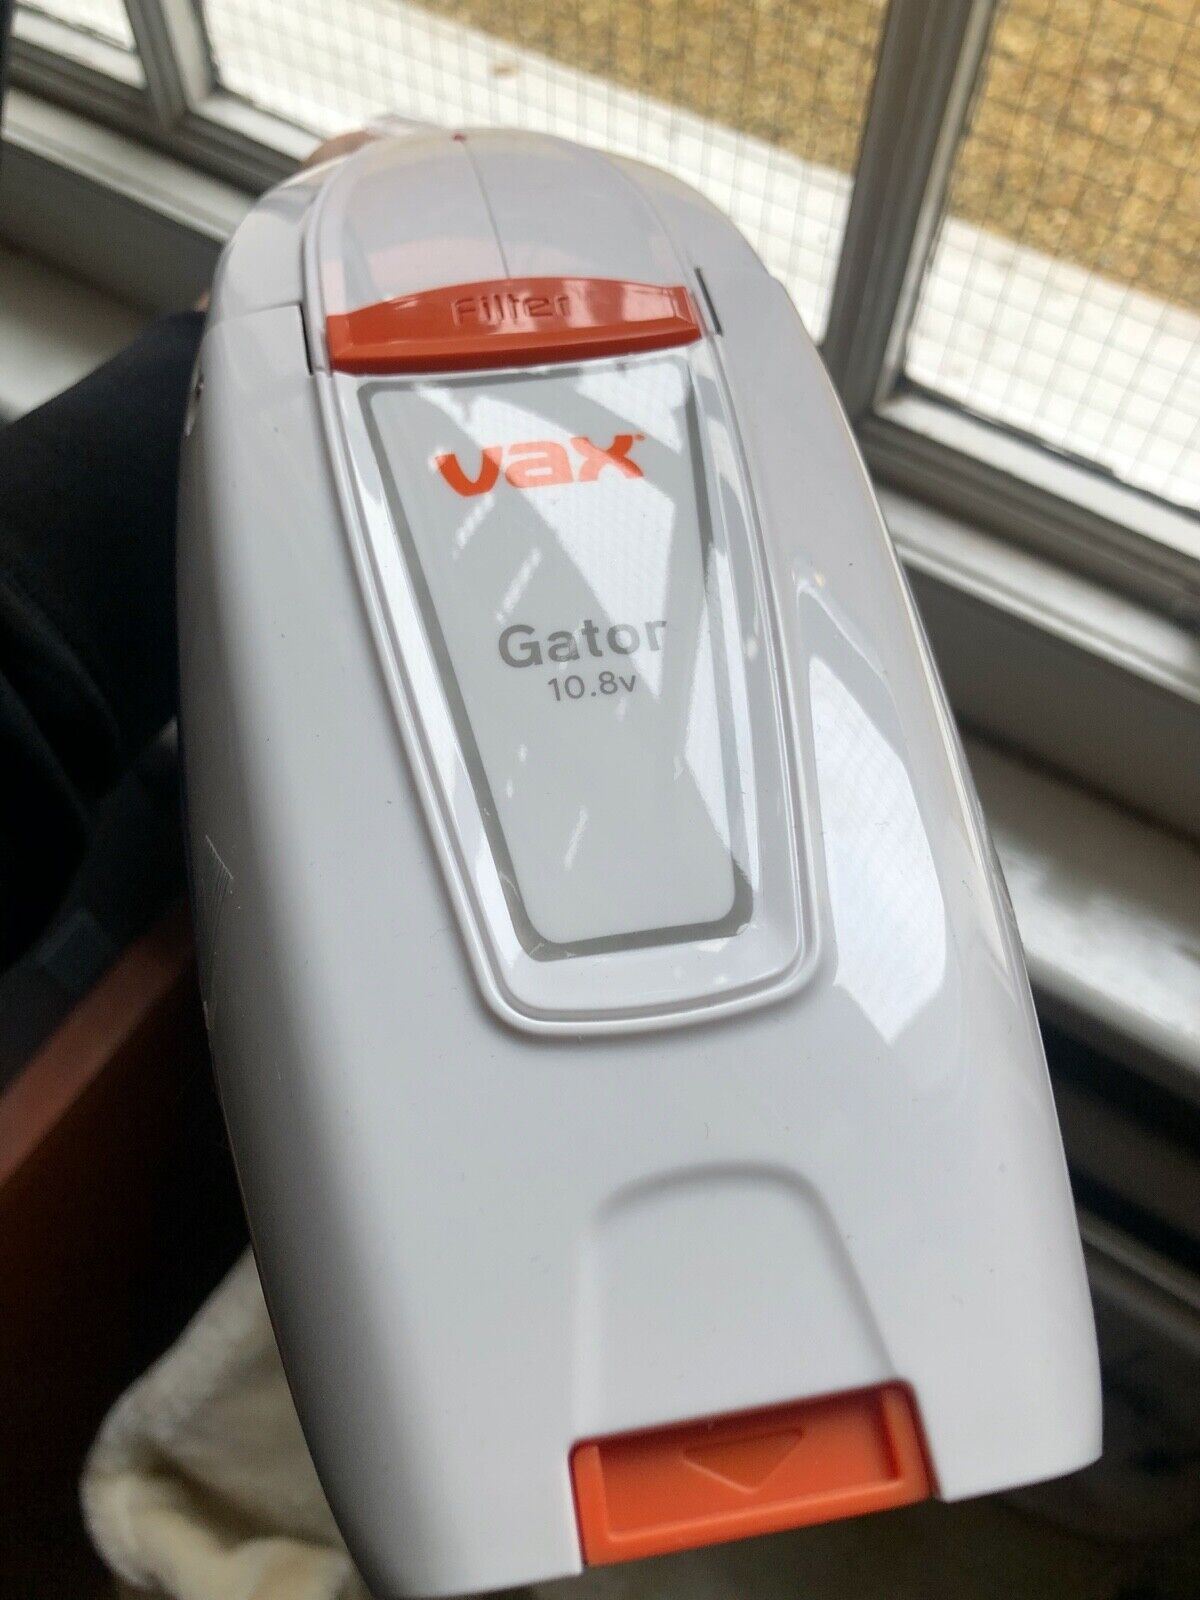 VAX Gator 10.8V H85-GA-B10 Handheld Vacuum